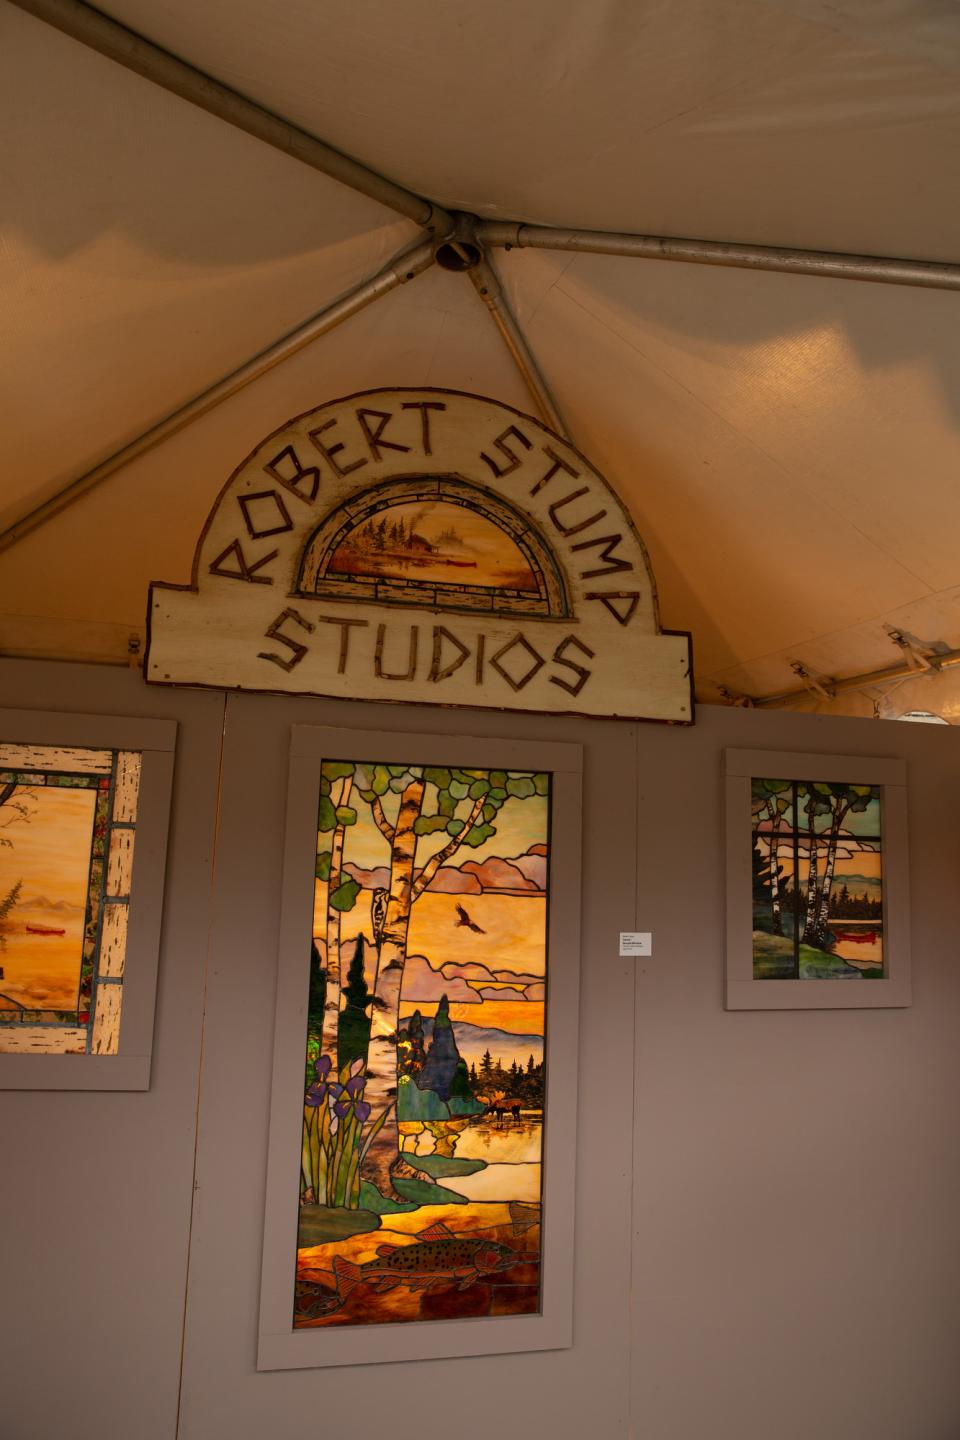 Robert Stump Studios stained glass design display.